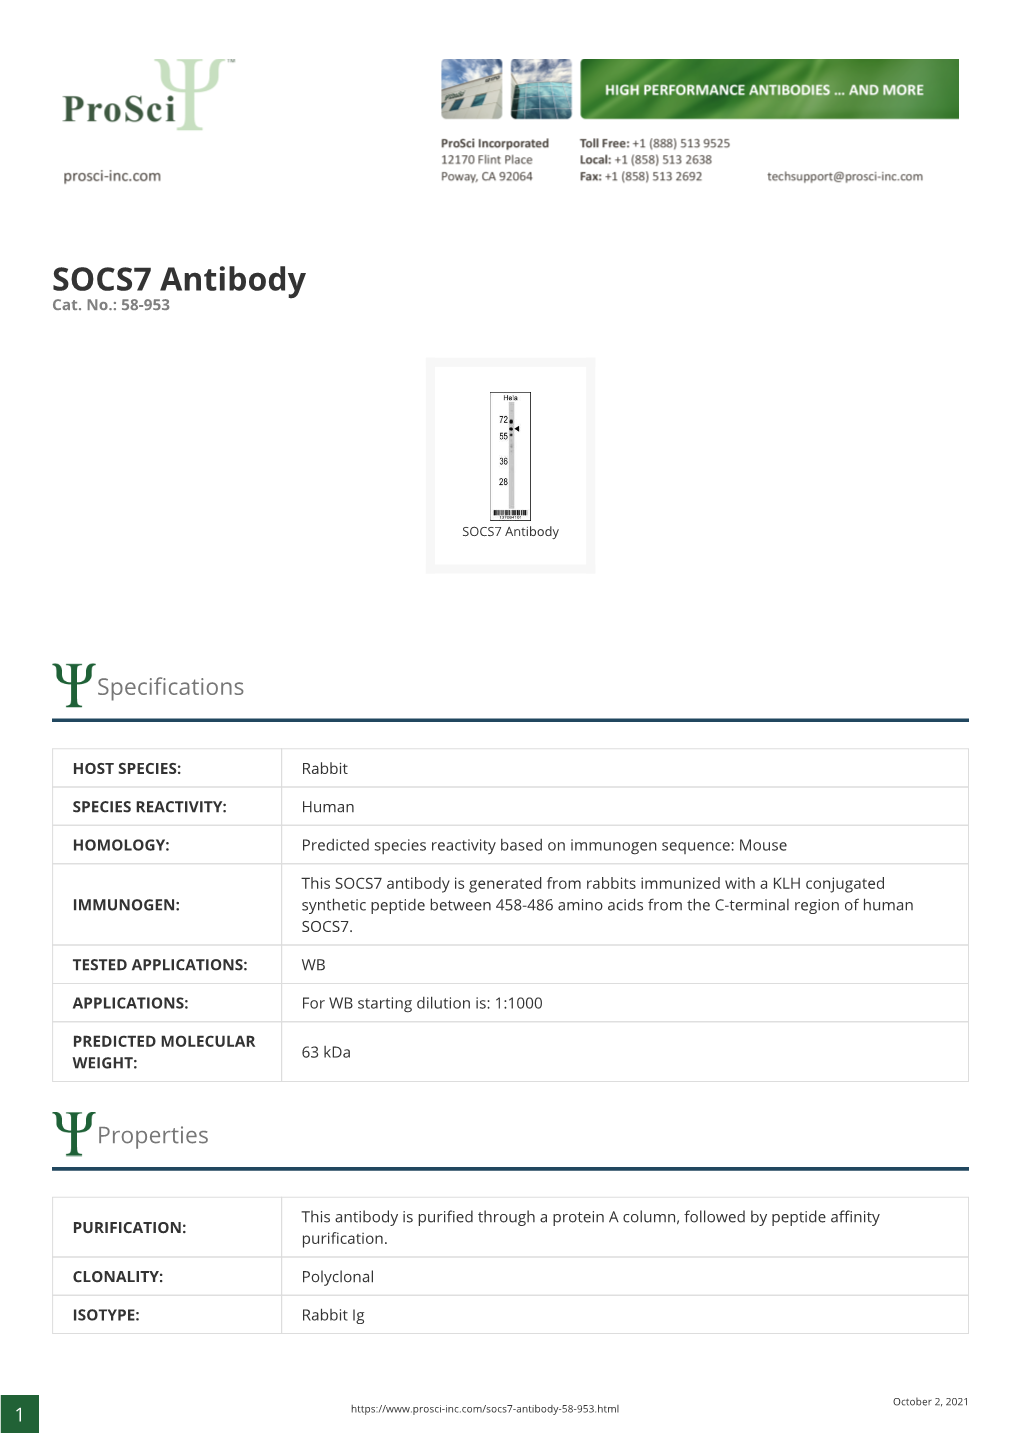 SOCS7 Antibody Cat